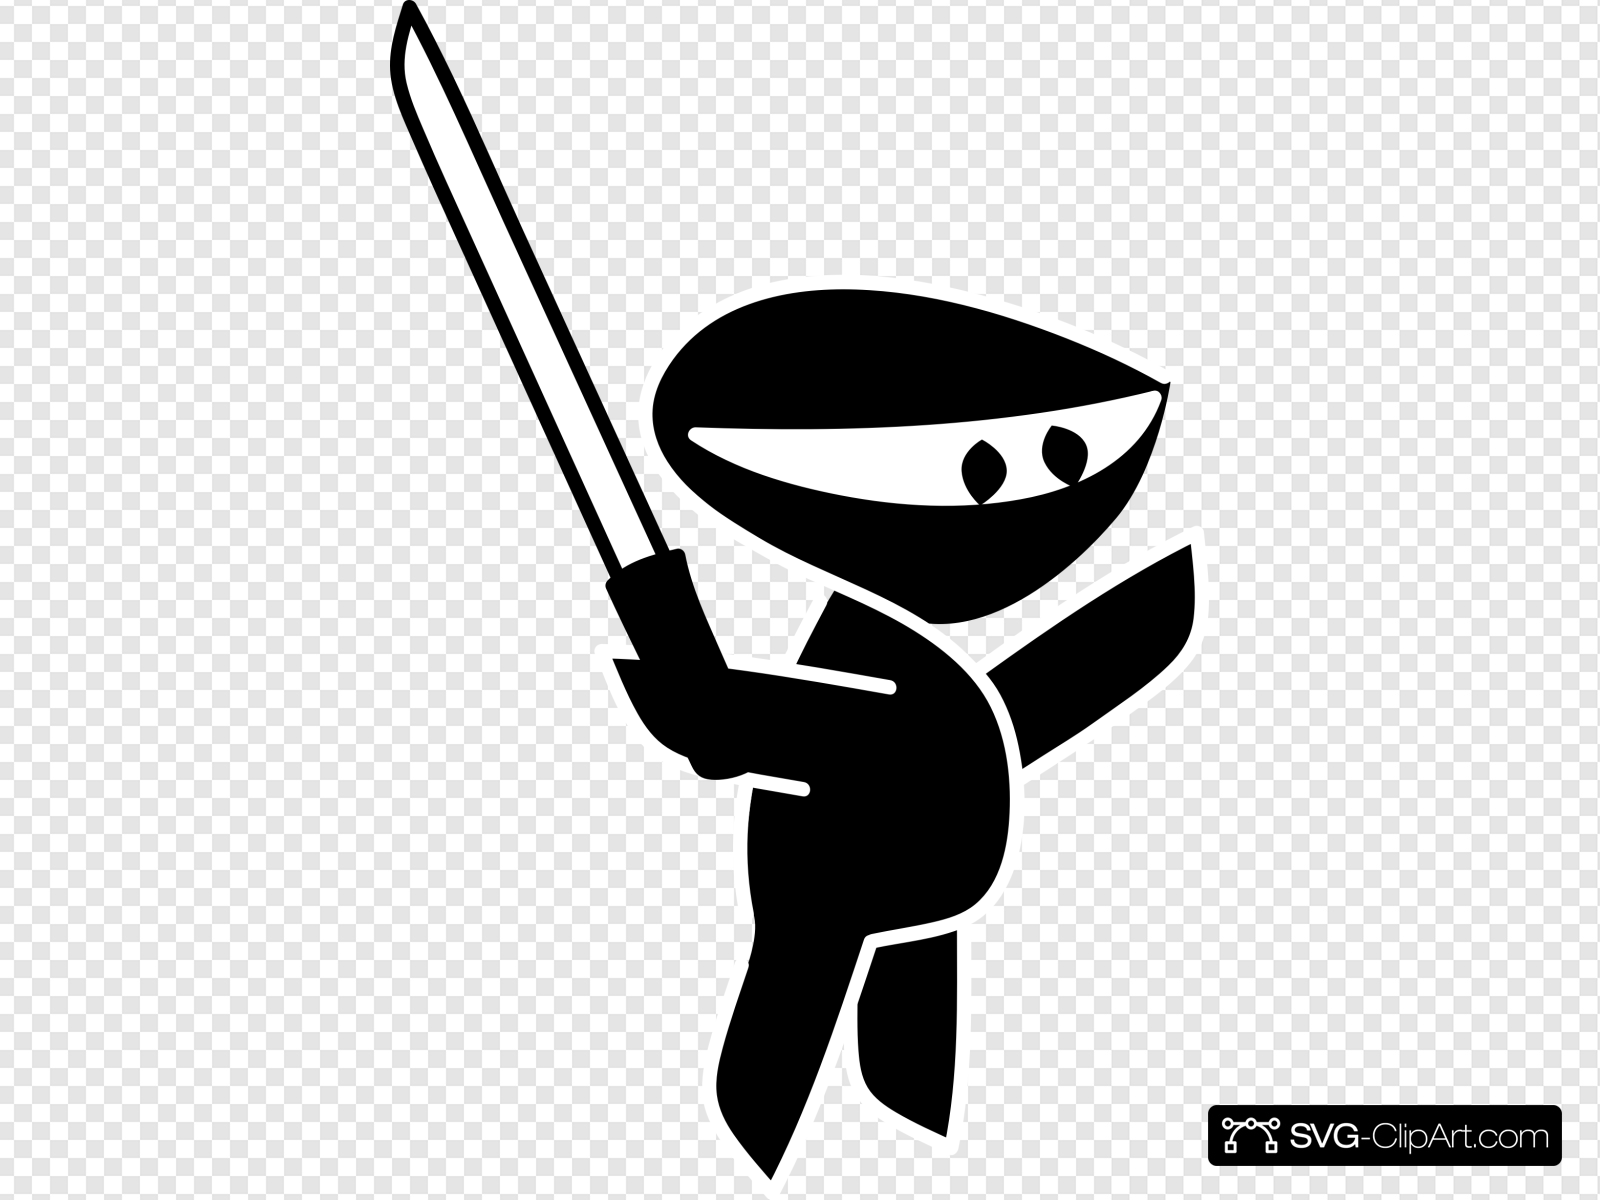 Attacking Ninja Clip art, Icon and SVG